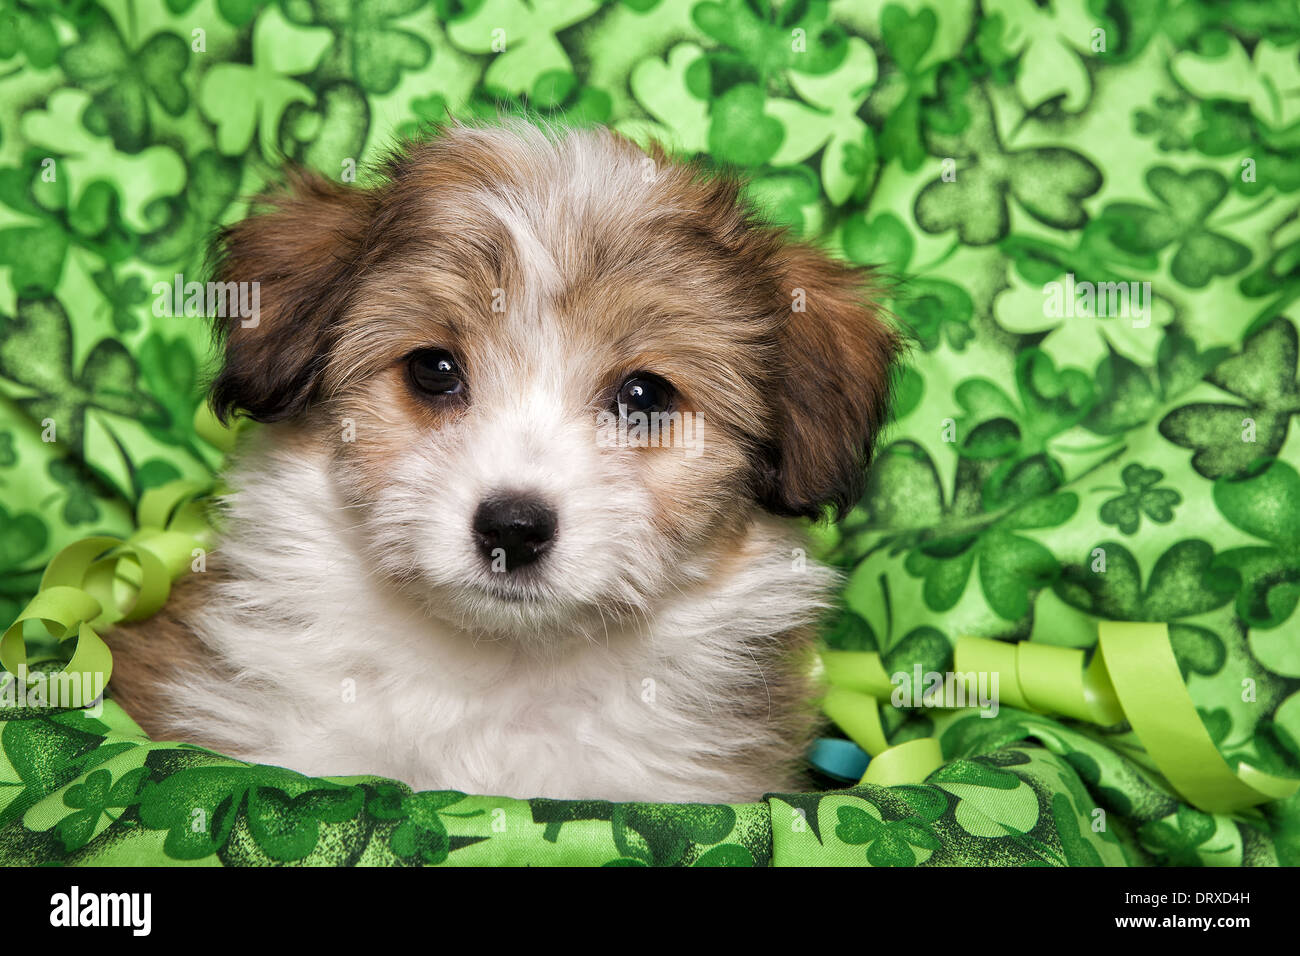 Cute fluffy puppy up close head shot on irish shamrock background Stock Photo